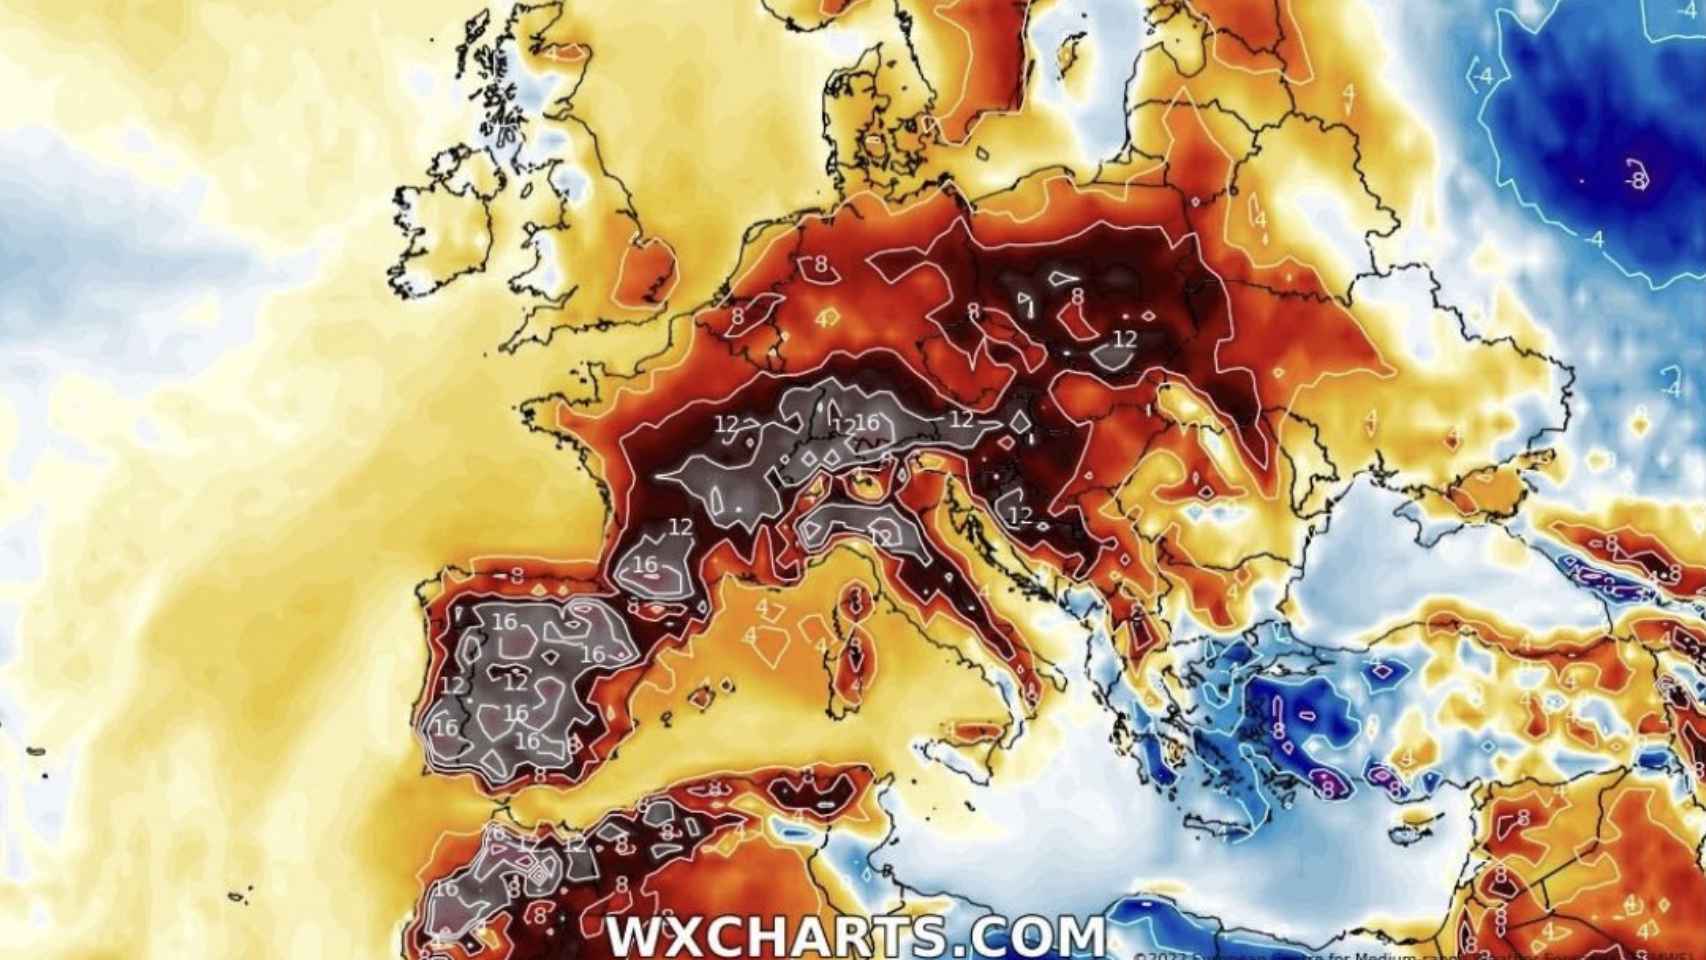 Anomalías de temperaturas en Europa Occidental durante este episodio de calor. WXCHARTS.